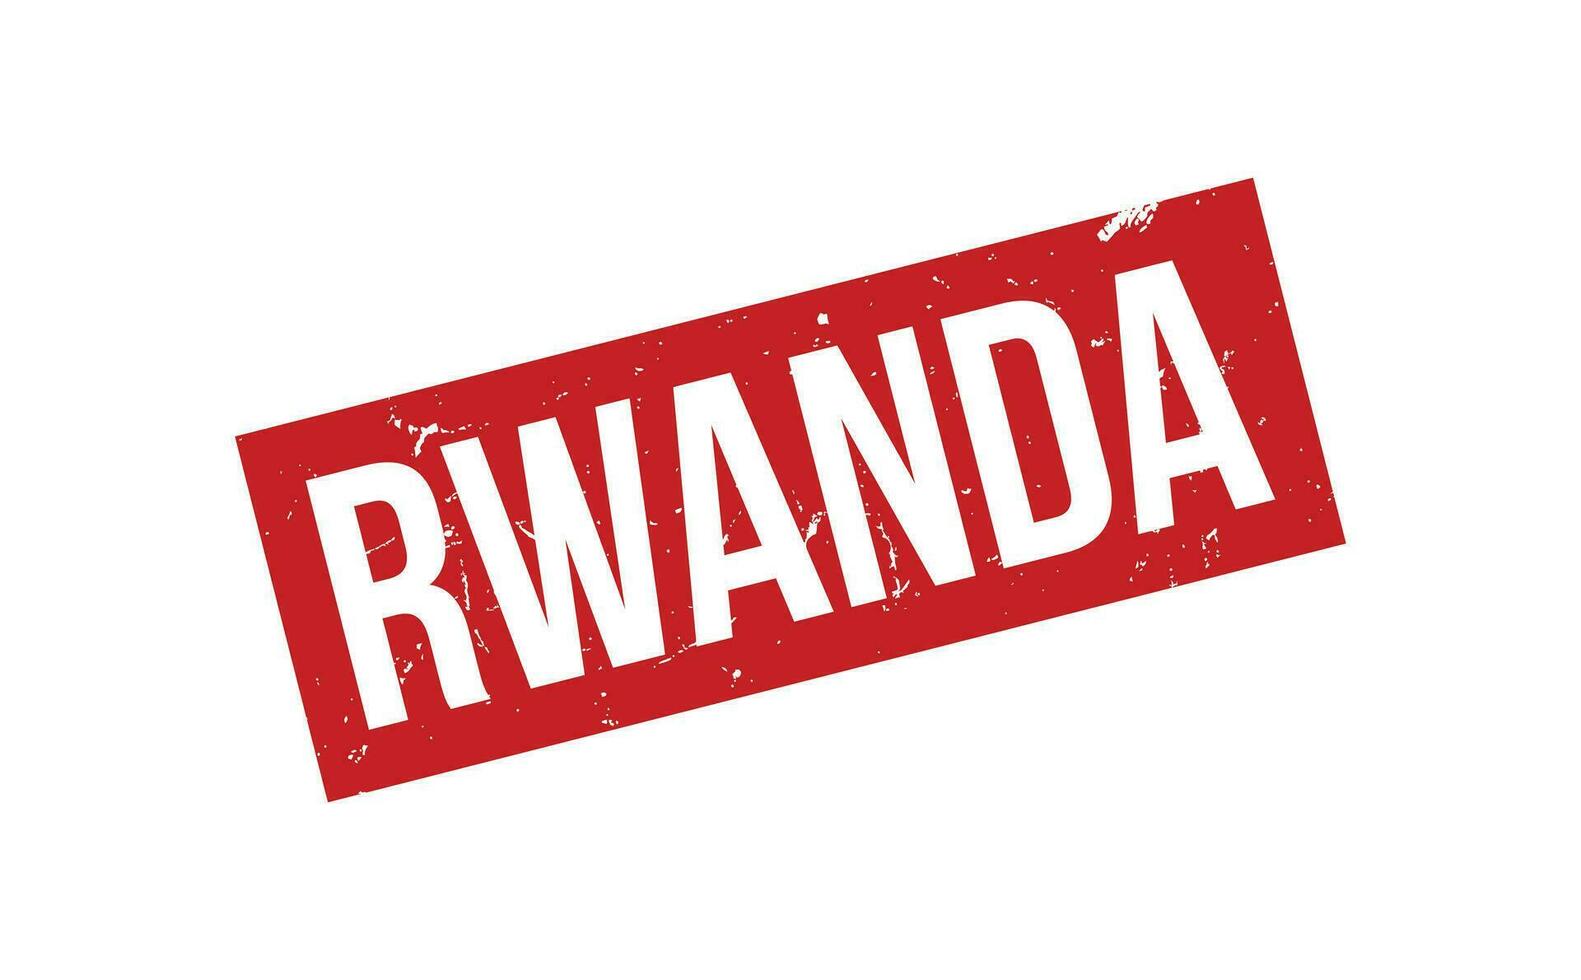 Ruanda borracha carimbo foca vetor